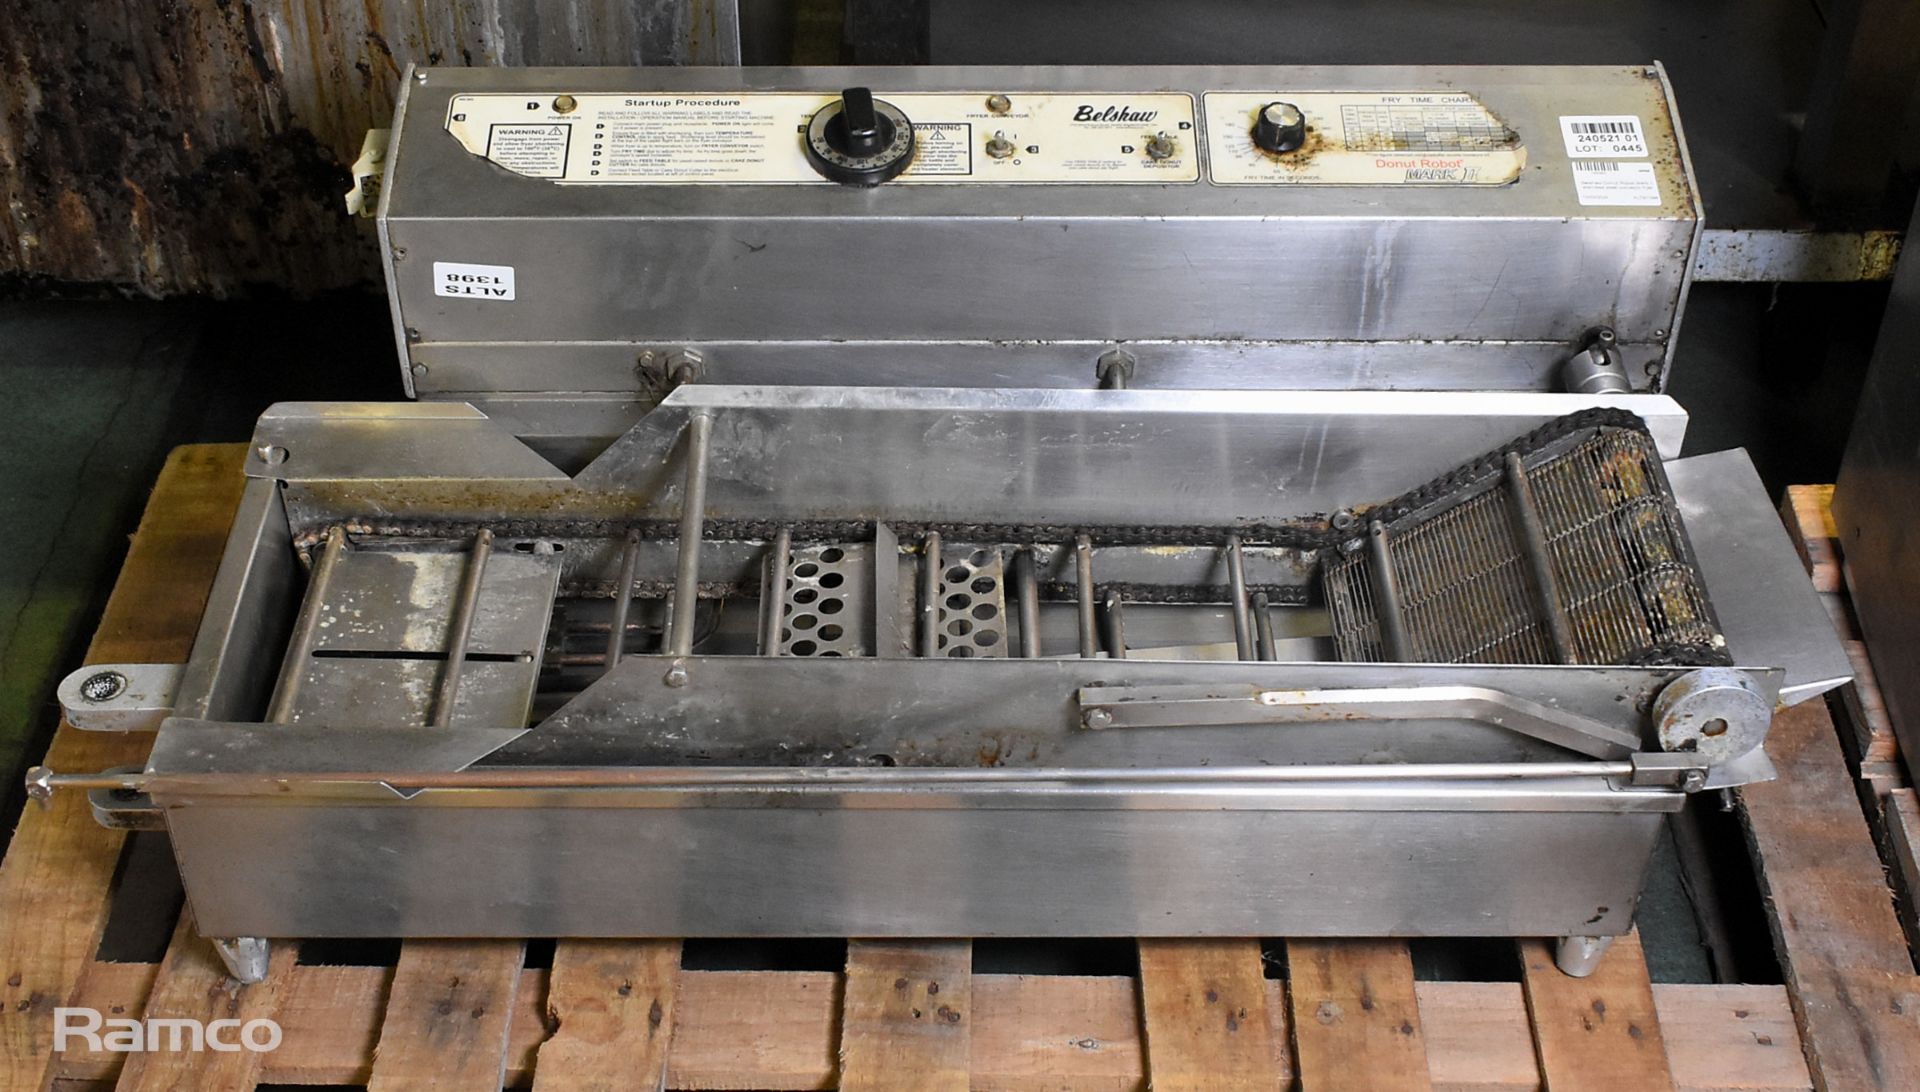 Belshaw Donut Robot Mark II stainless steel conveyor fryer